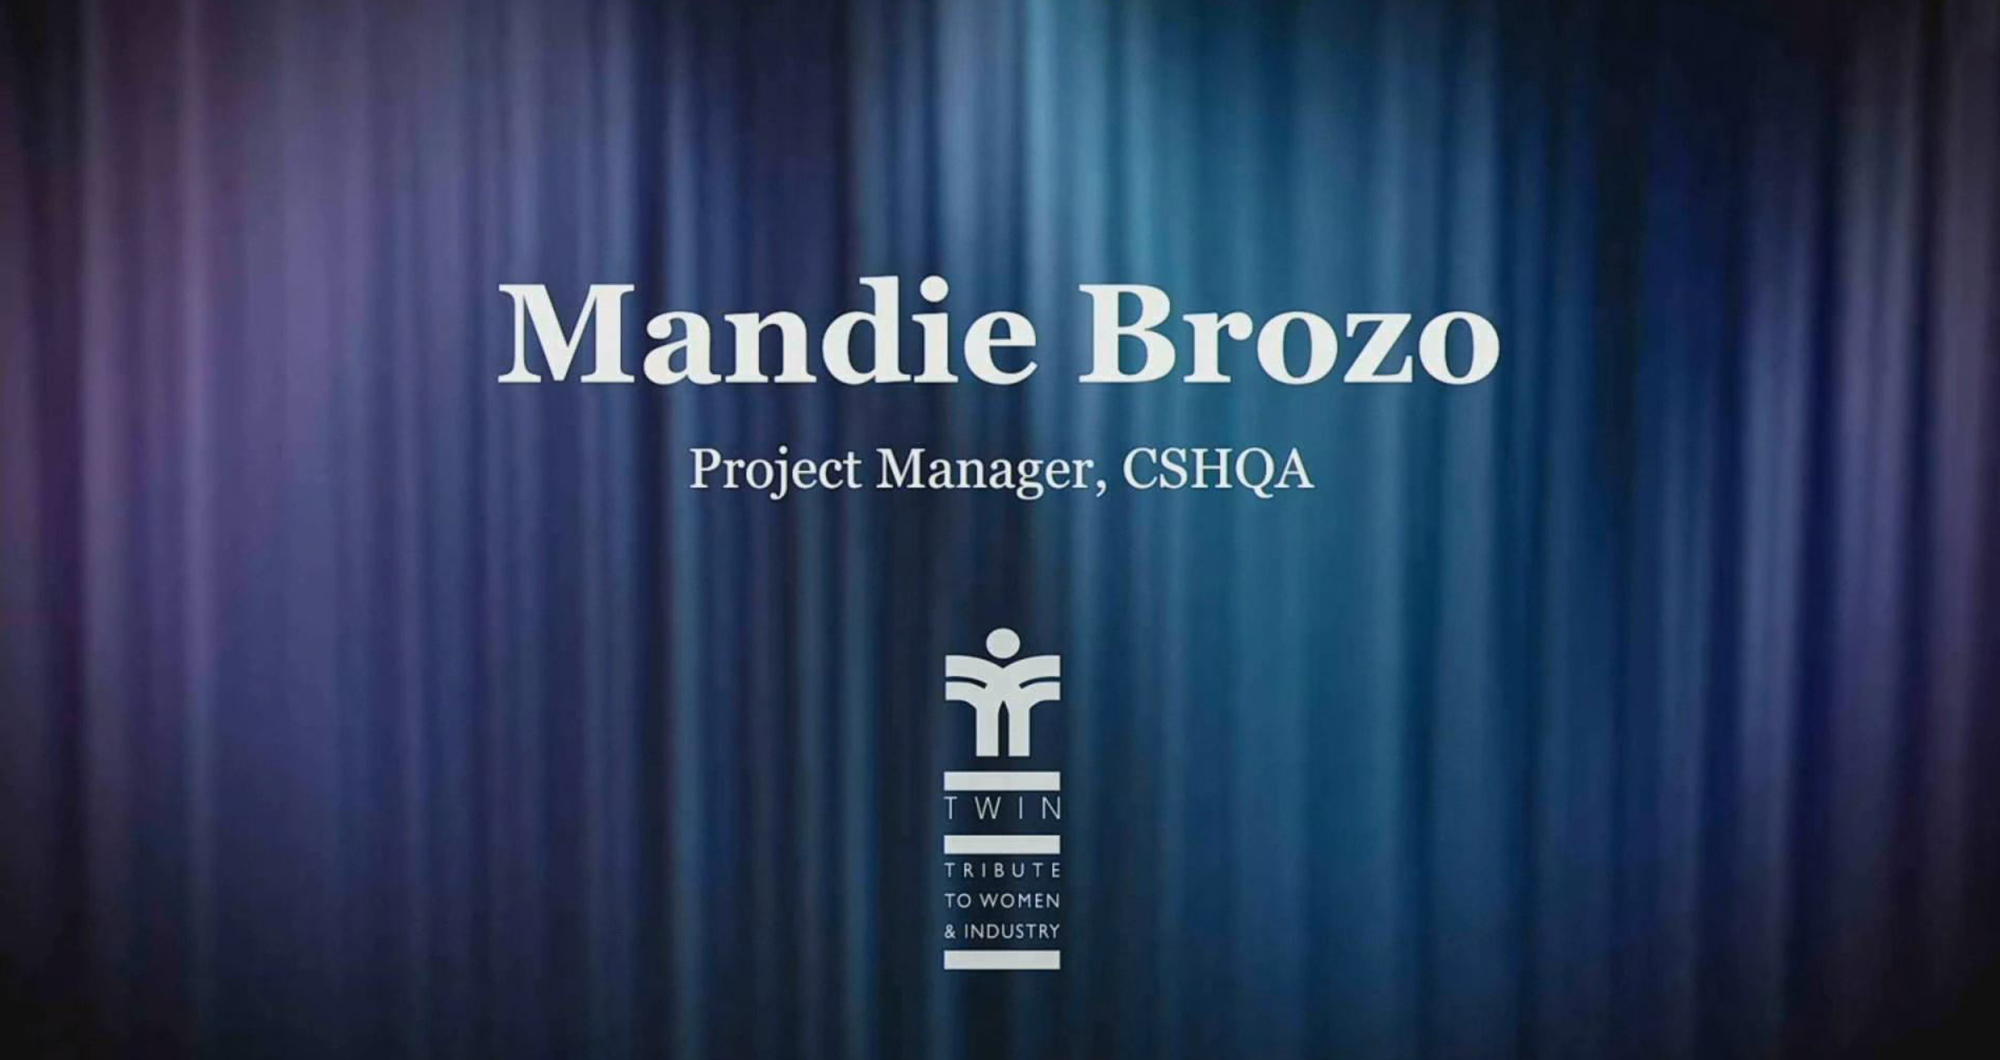 CSHQA’s Mandie Brozo Selected as WCA TWIN Award Honoree